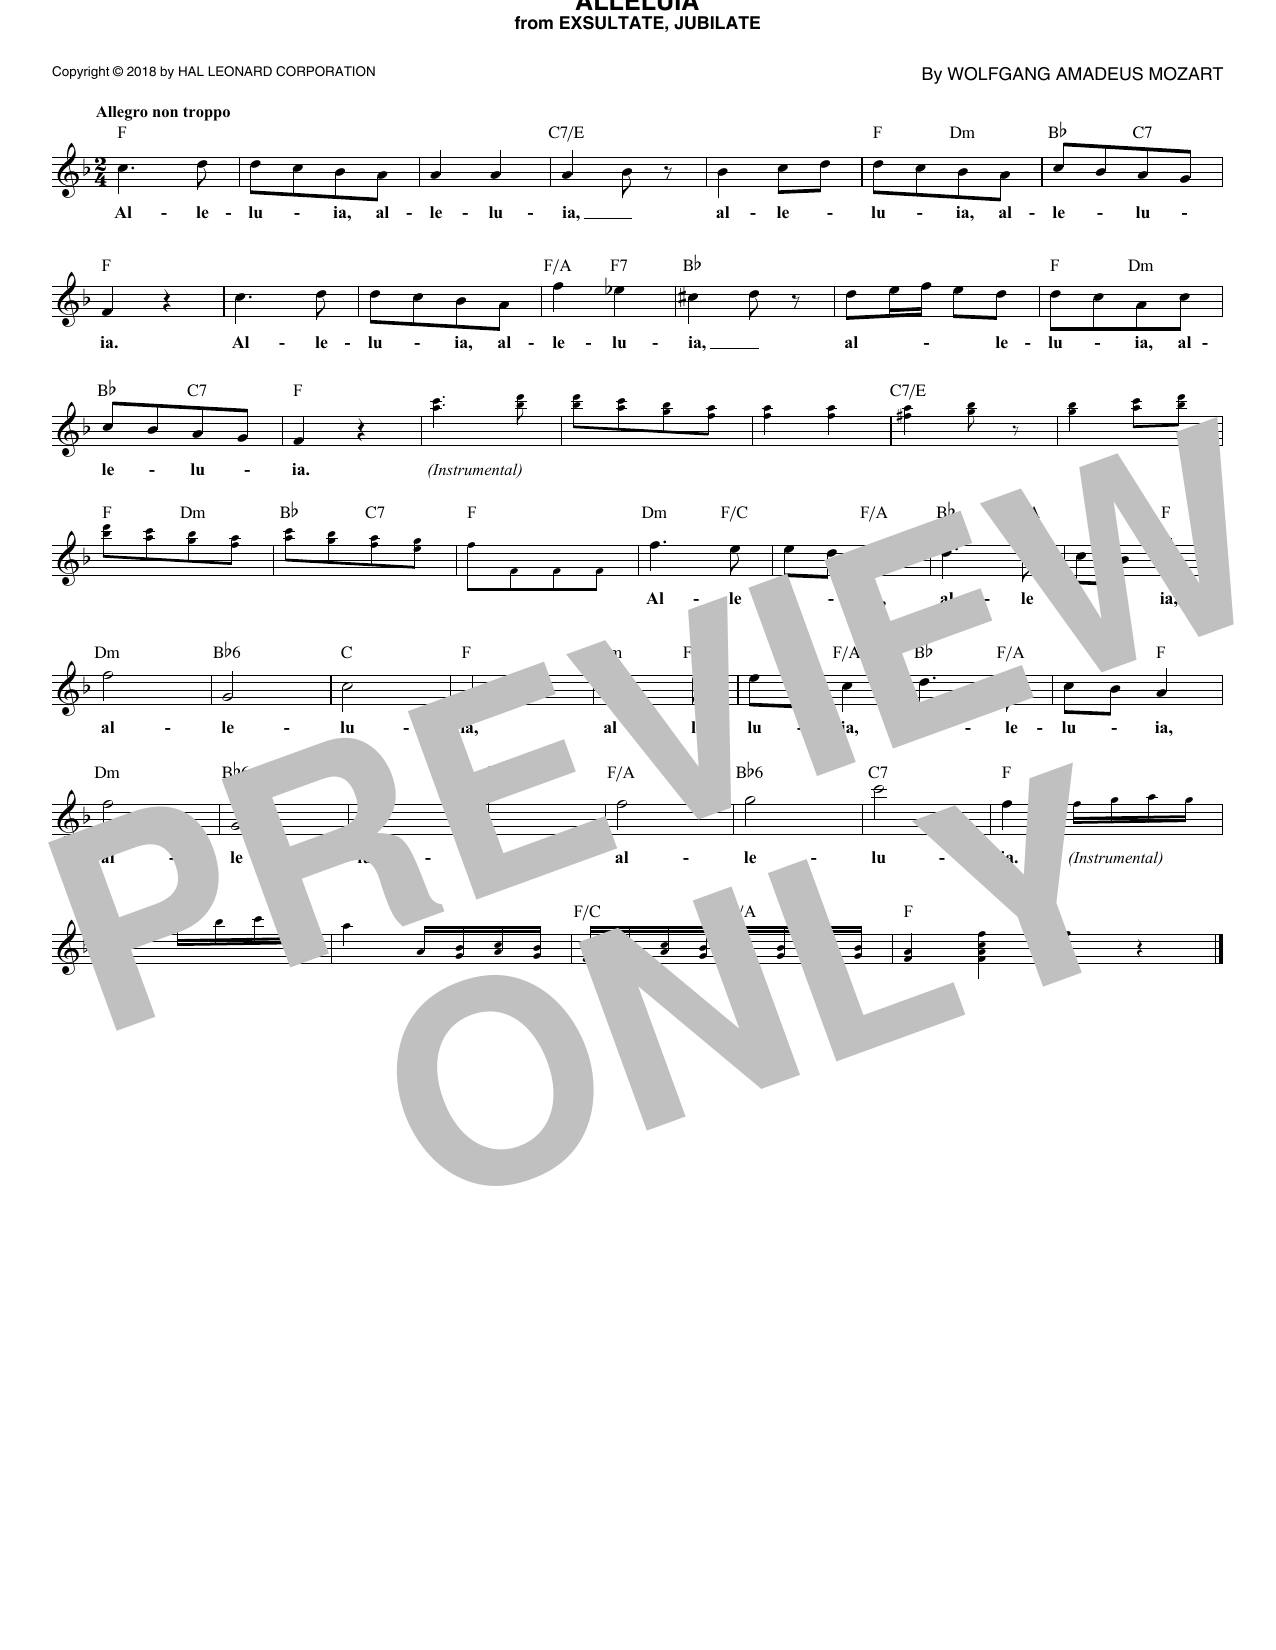 Wolfgang Amadeus Mozart Alleluia, K. 165 Sheet Music Notes & Chords for Lead Sheet / Fake Book - Download or Print PDF